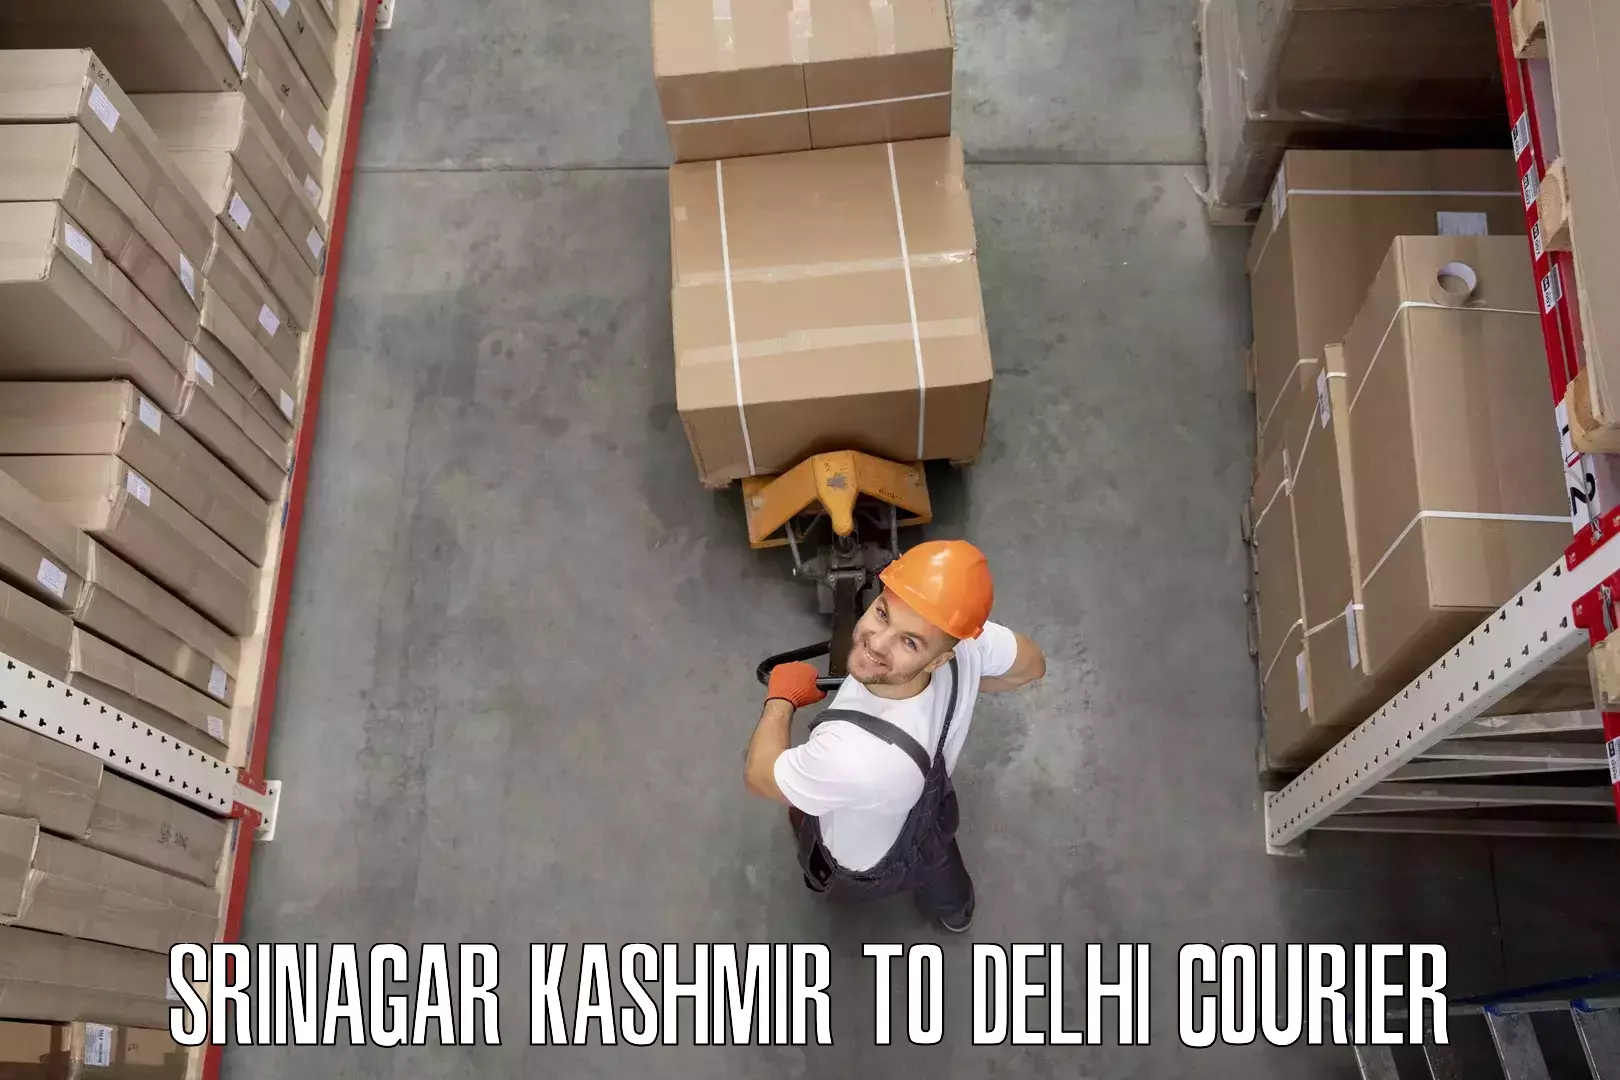 Furniture moving specialists Srinagar Kashmir to NCR